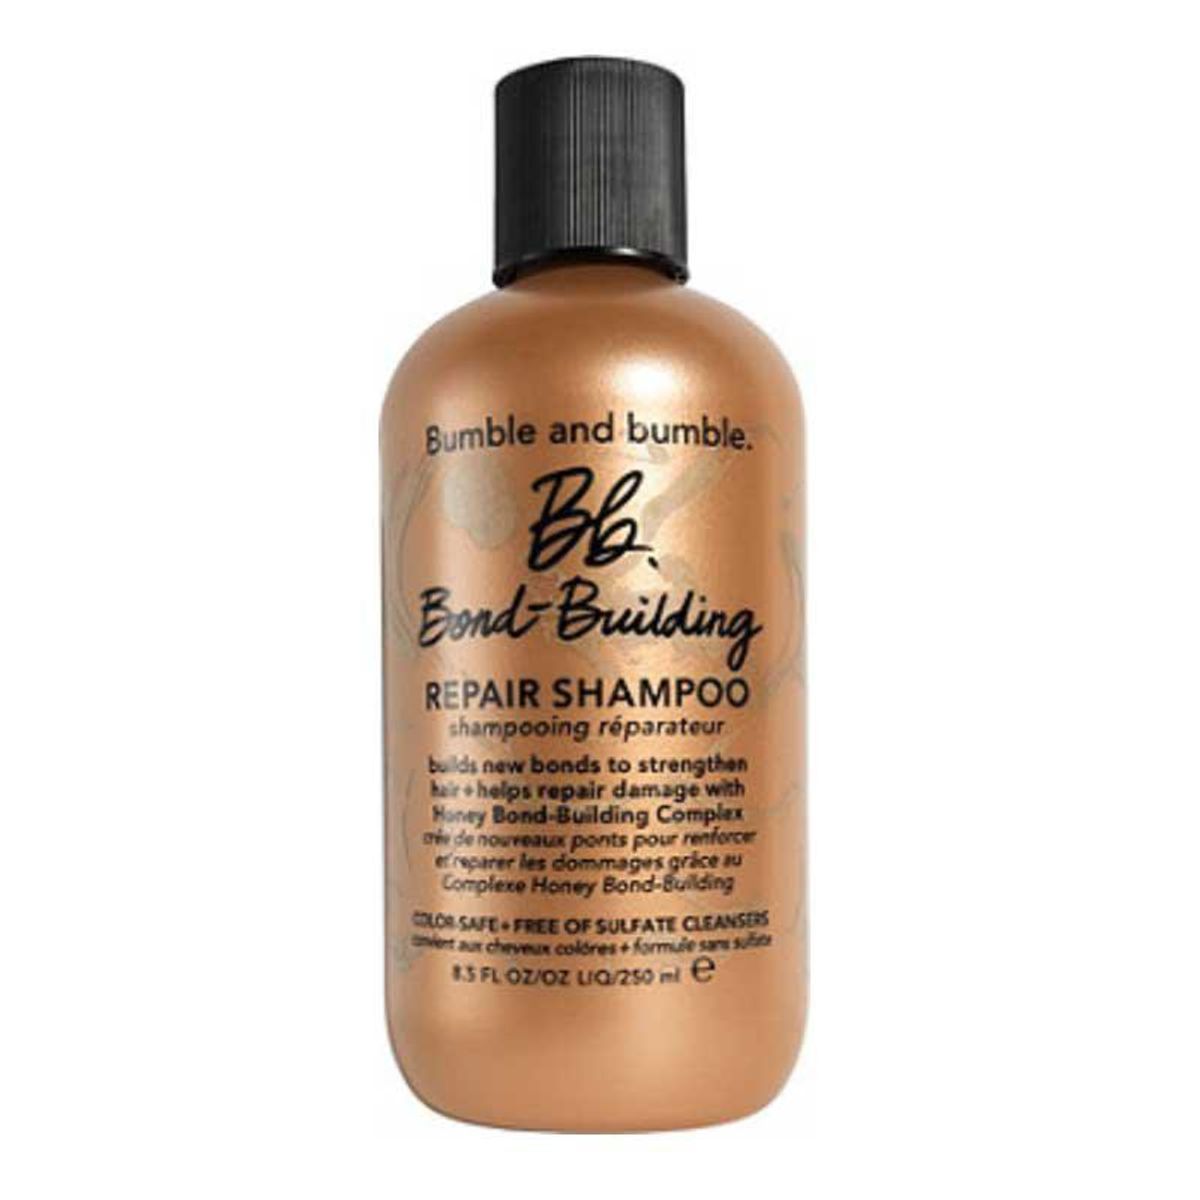 bumble and bumble bb bond building repair shampoo